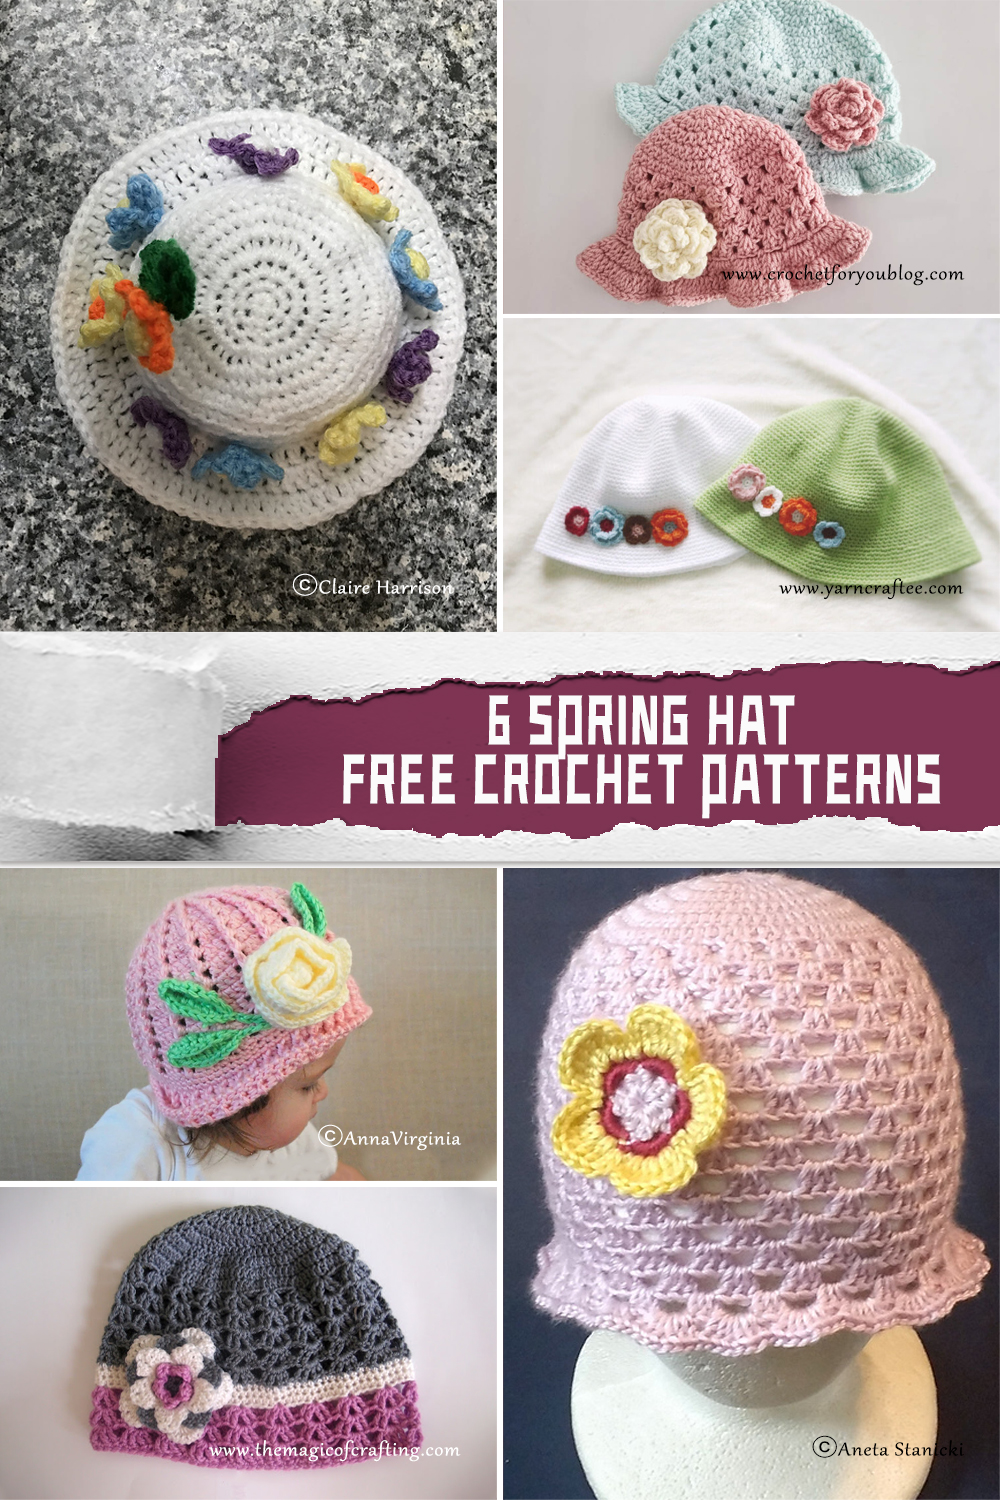 6 Spring Hat Crochet Patterns - FREE - iGOODideas.com